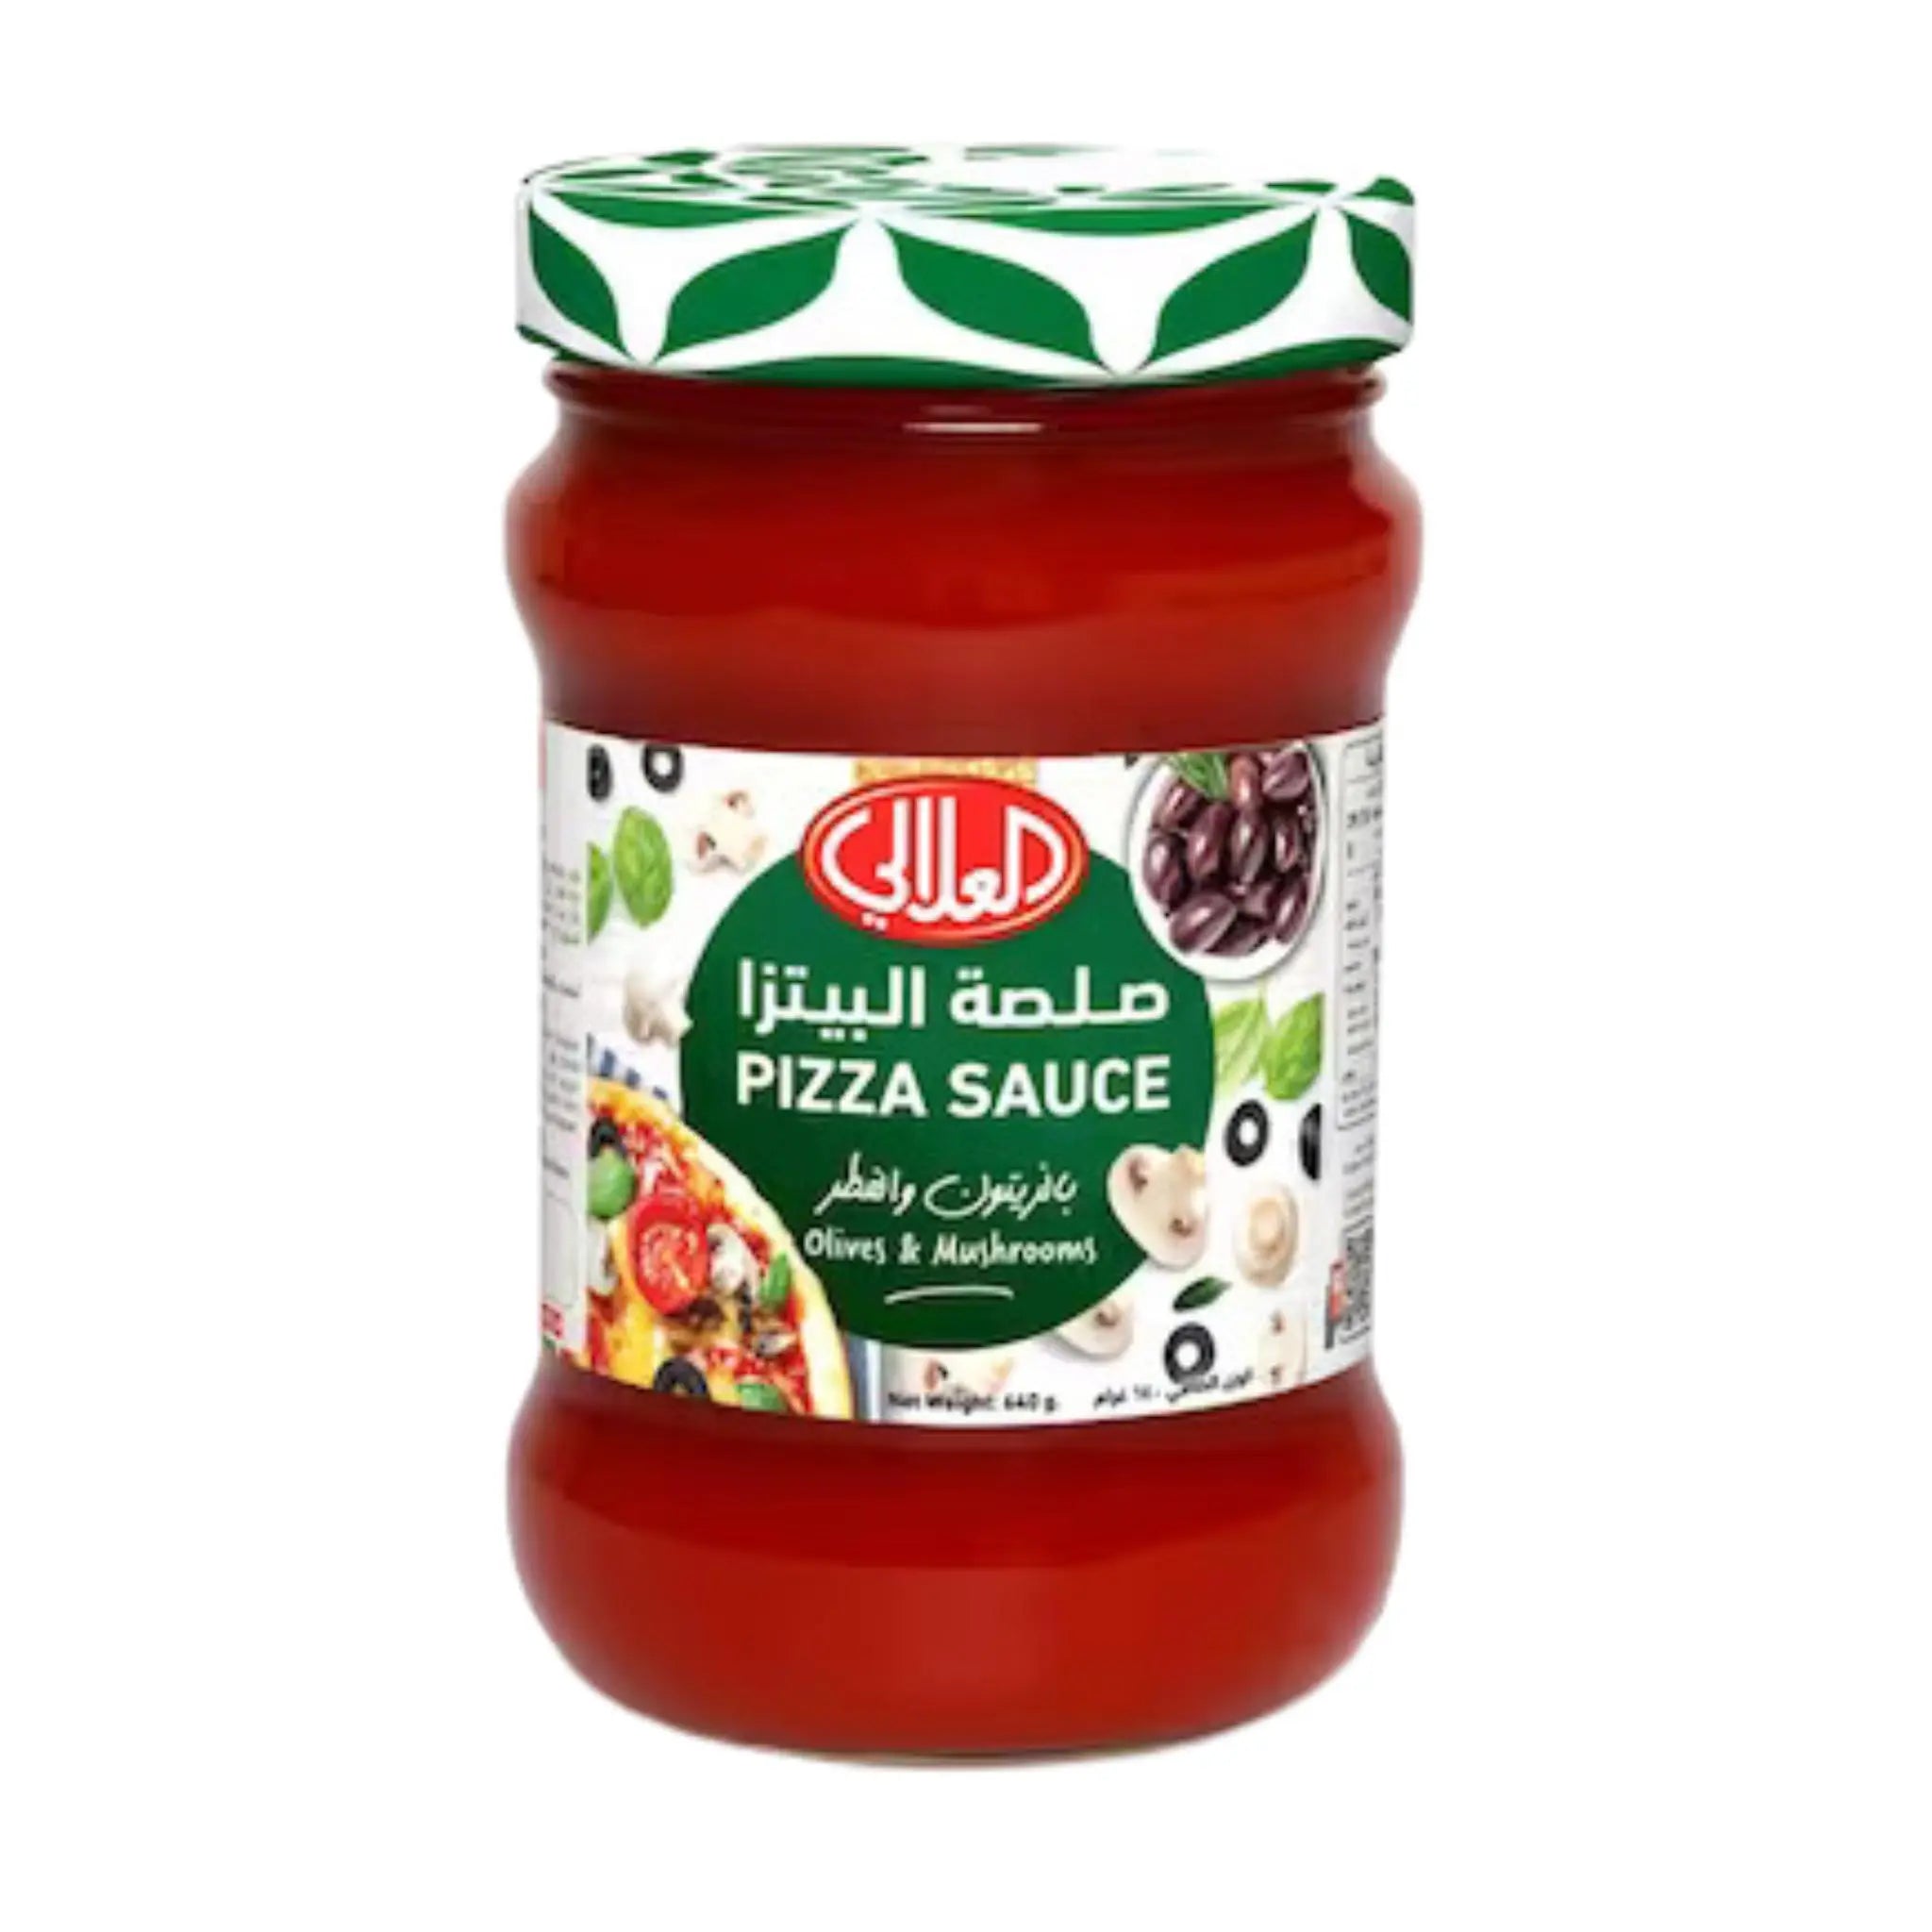 Al Alali Pizza Sauce Olives & Mushrooms 640g - 12x640g (1 carton) - Marino.AE